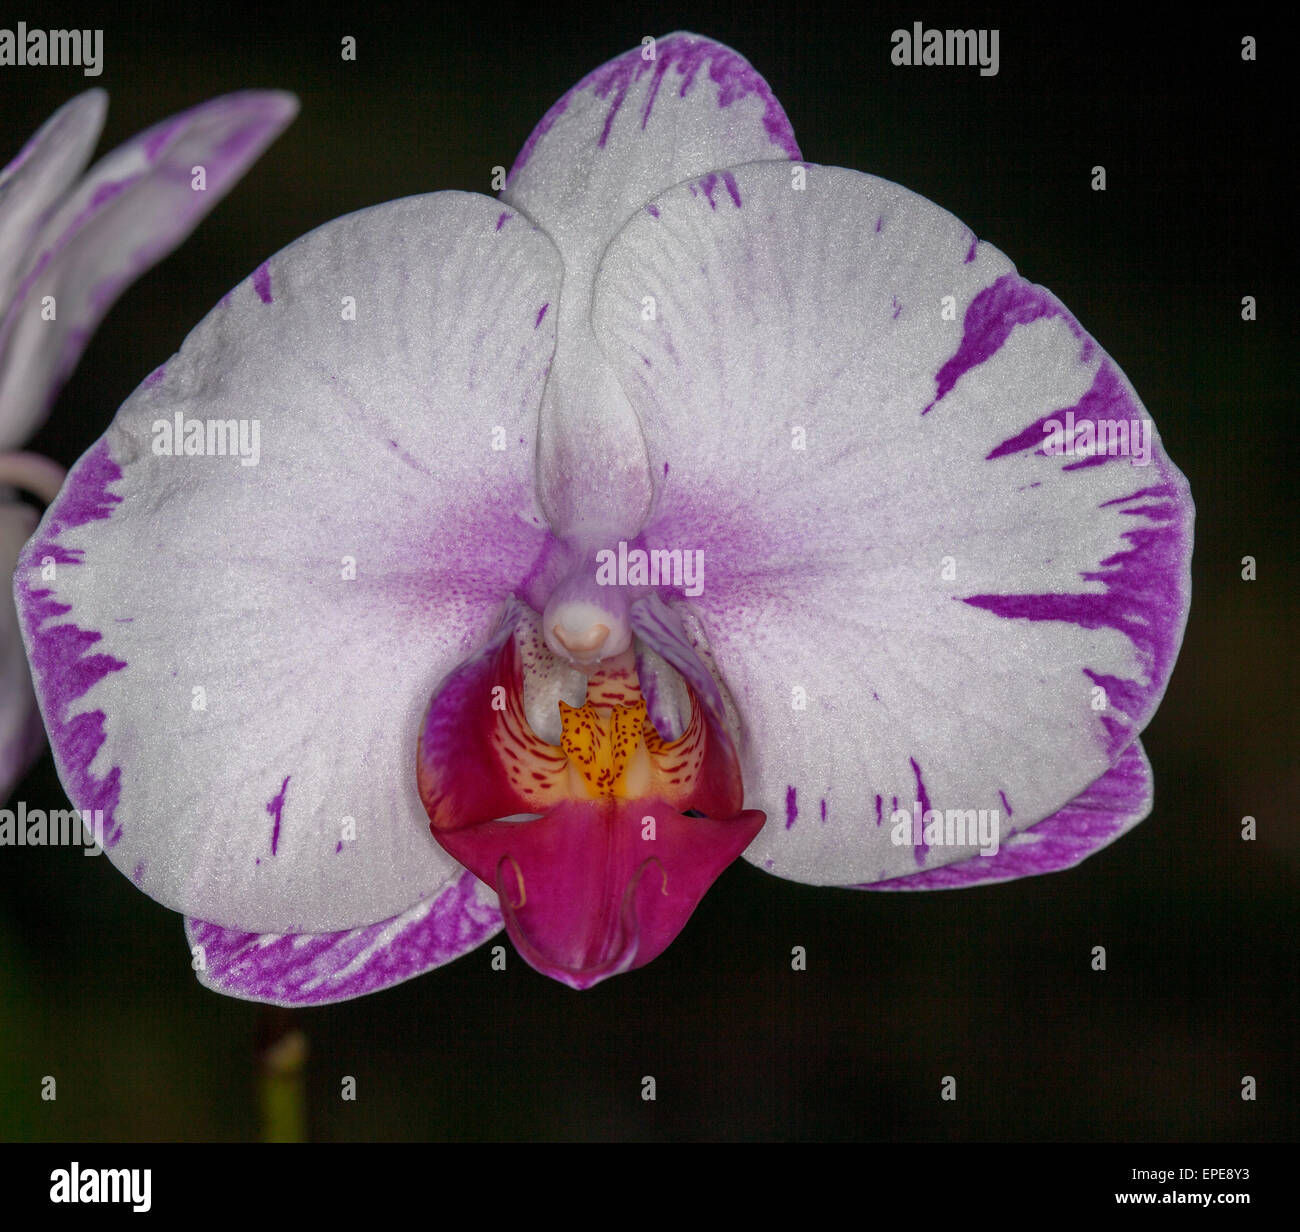 Doritaenopsis 'Lightning' mutation, white orchid flower with splashes of magenta / purple on dark background Stock Photo